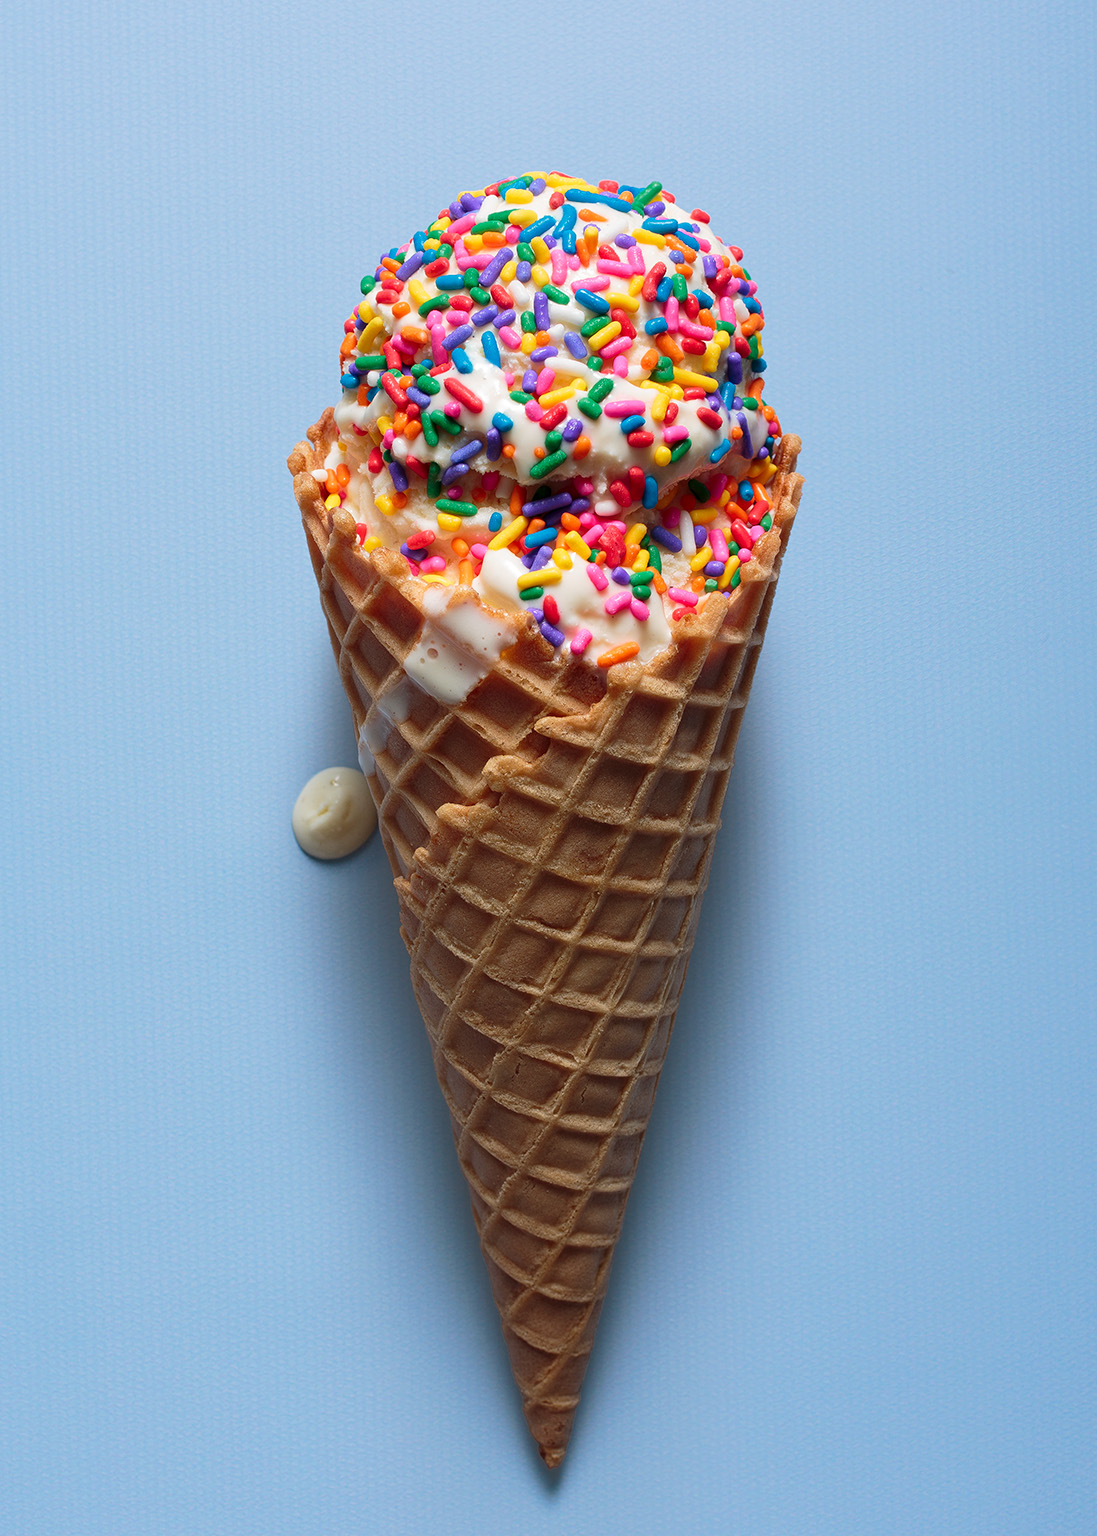 ice cream cone by Miami Product Photographer Tom Clark